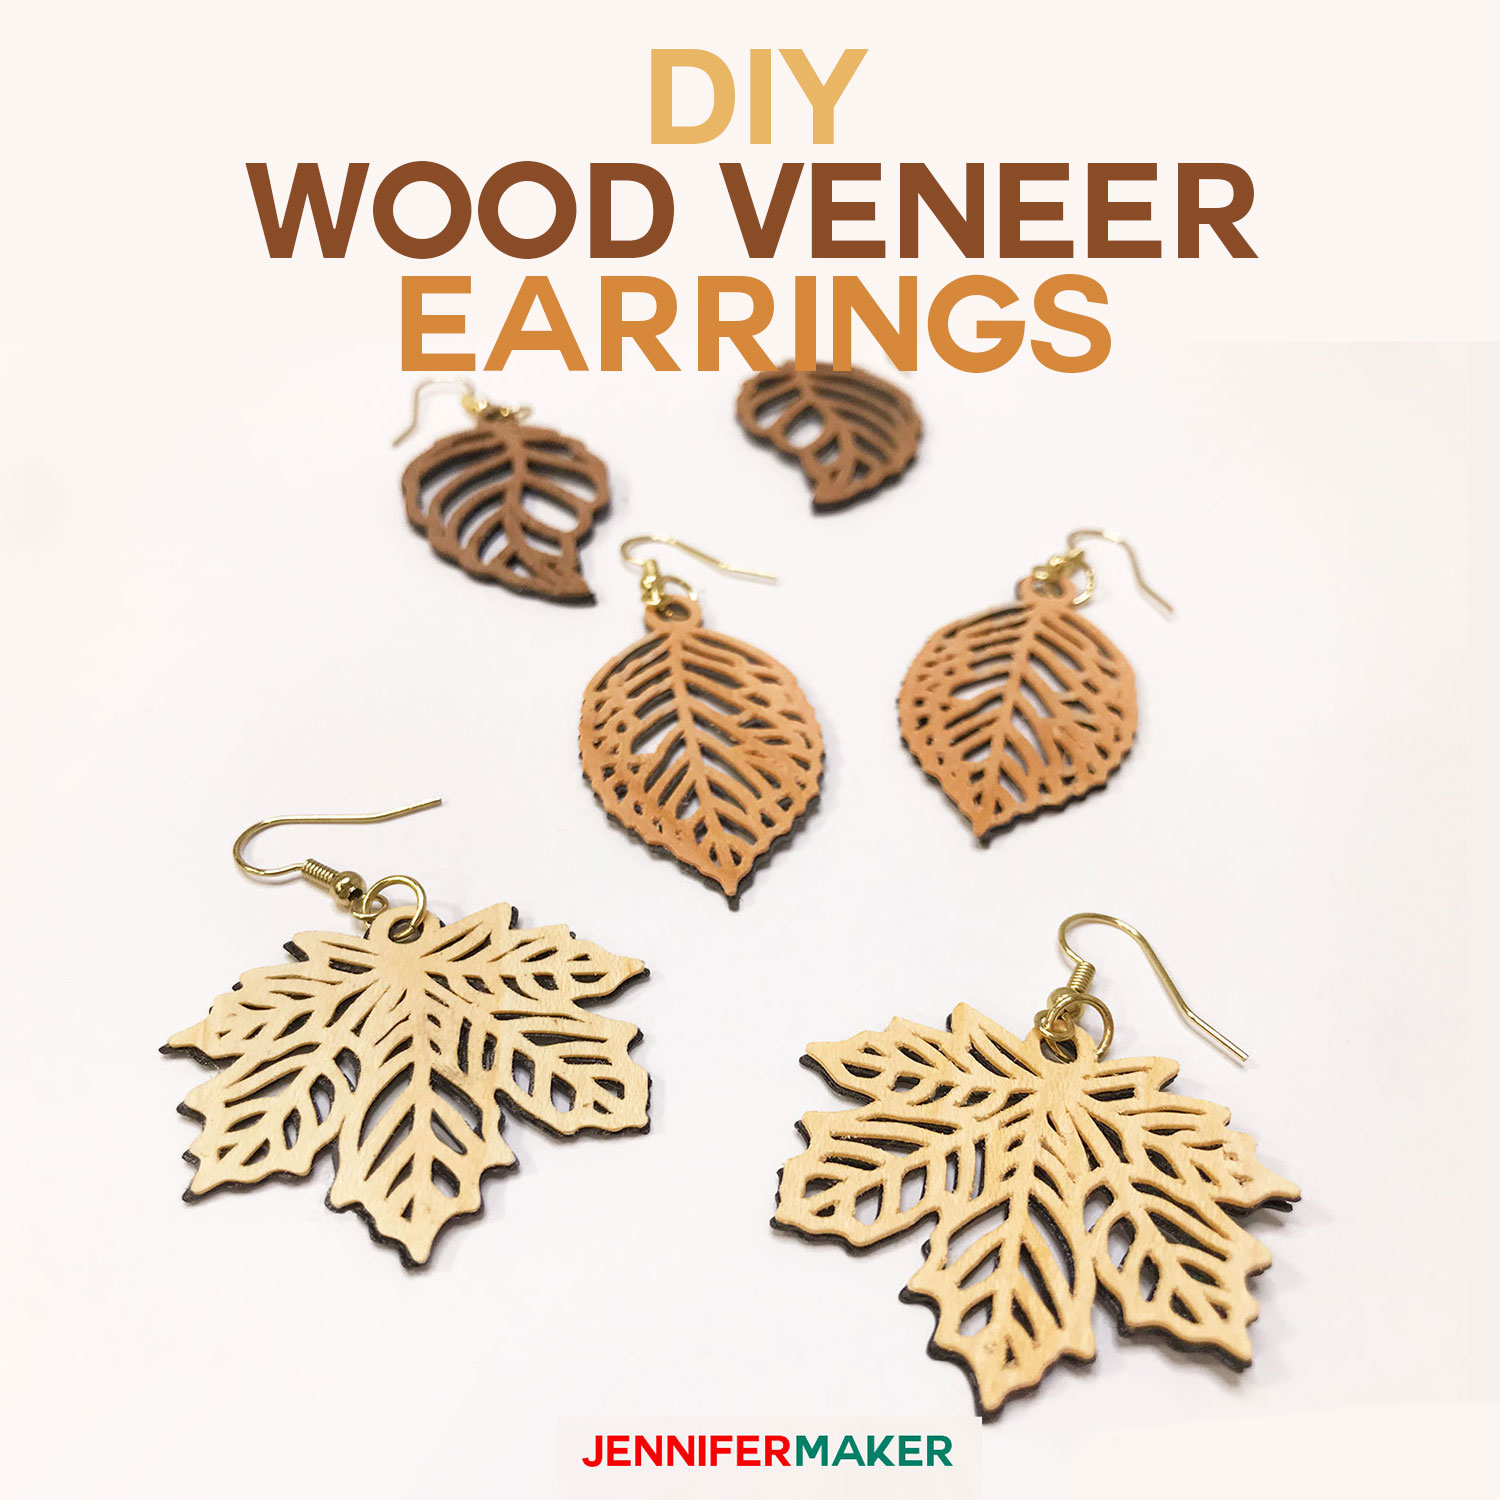 Cricut Wood Veneer Earrings with free patterns | Cut on a Cricut Explore or Maker | #cricutmade #woodveneer #earrings #cricutexplore #svgcutfile